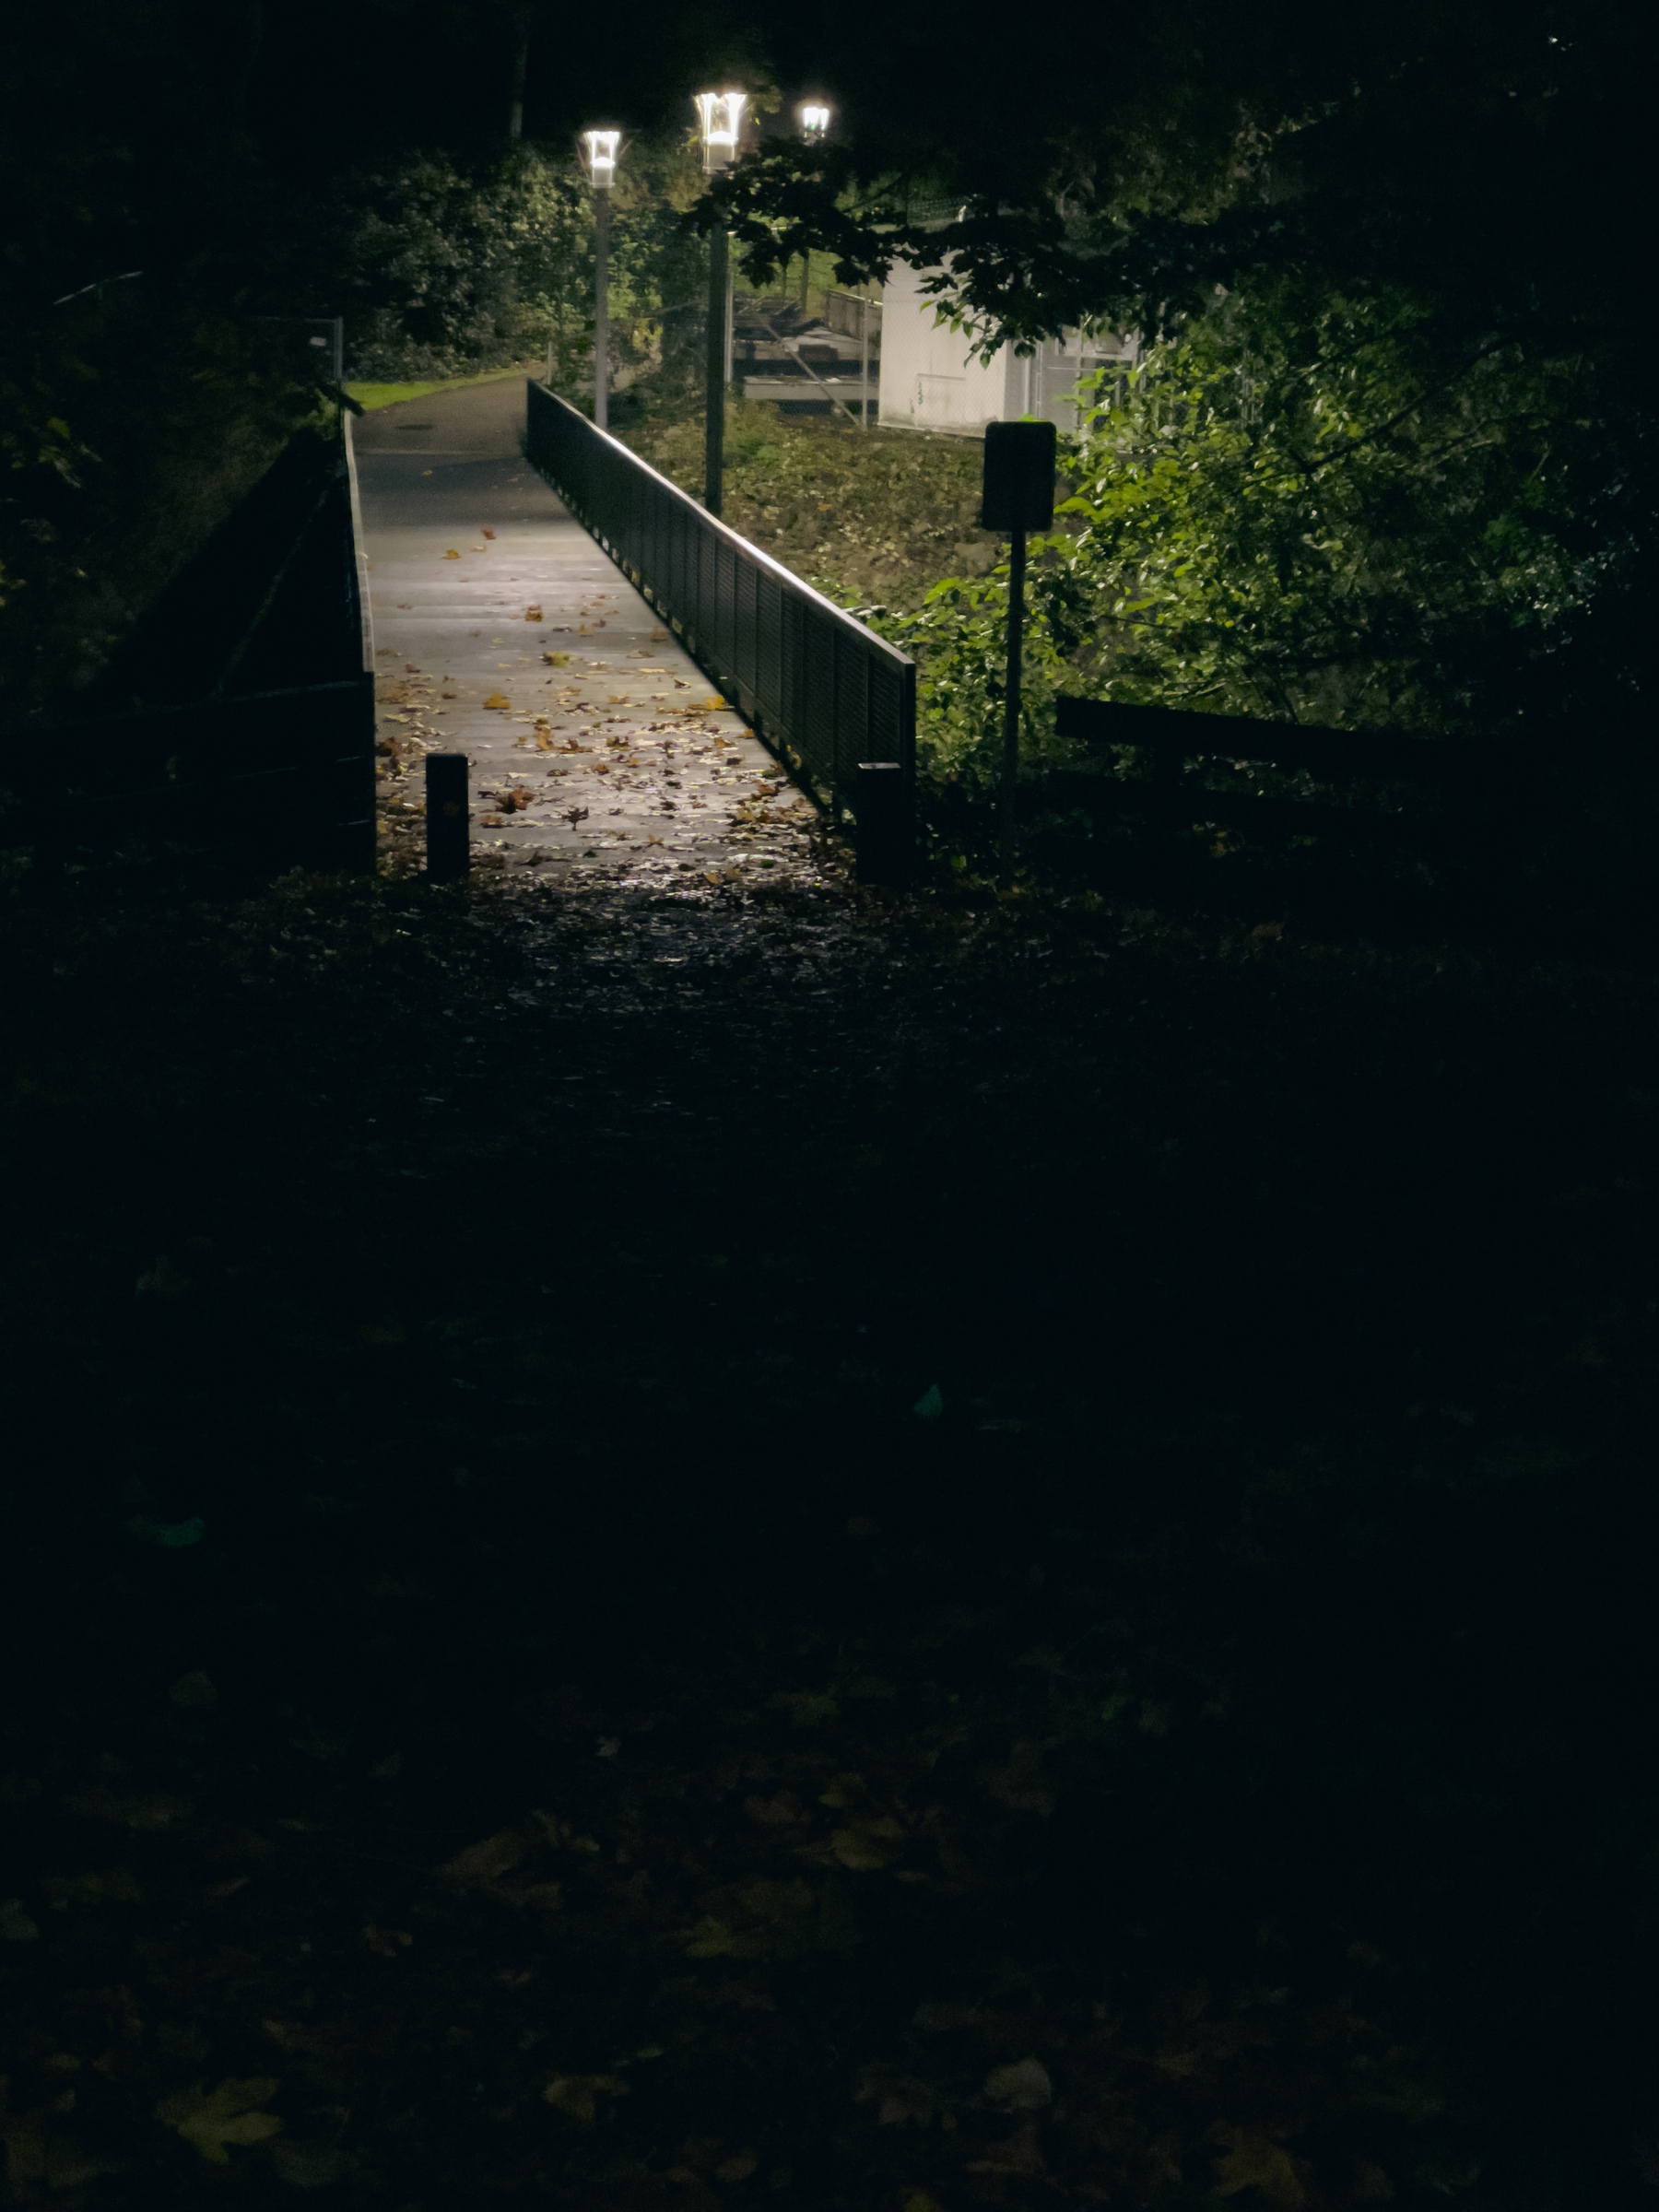 Footbridge illuminated in upper left corner of frame in otherwise deeply shadowed landscape.